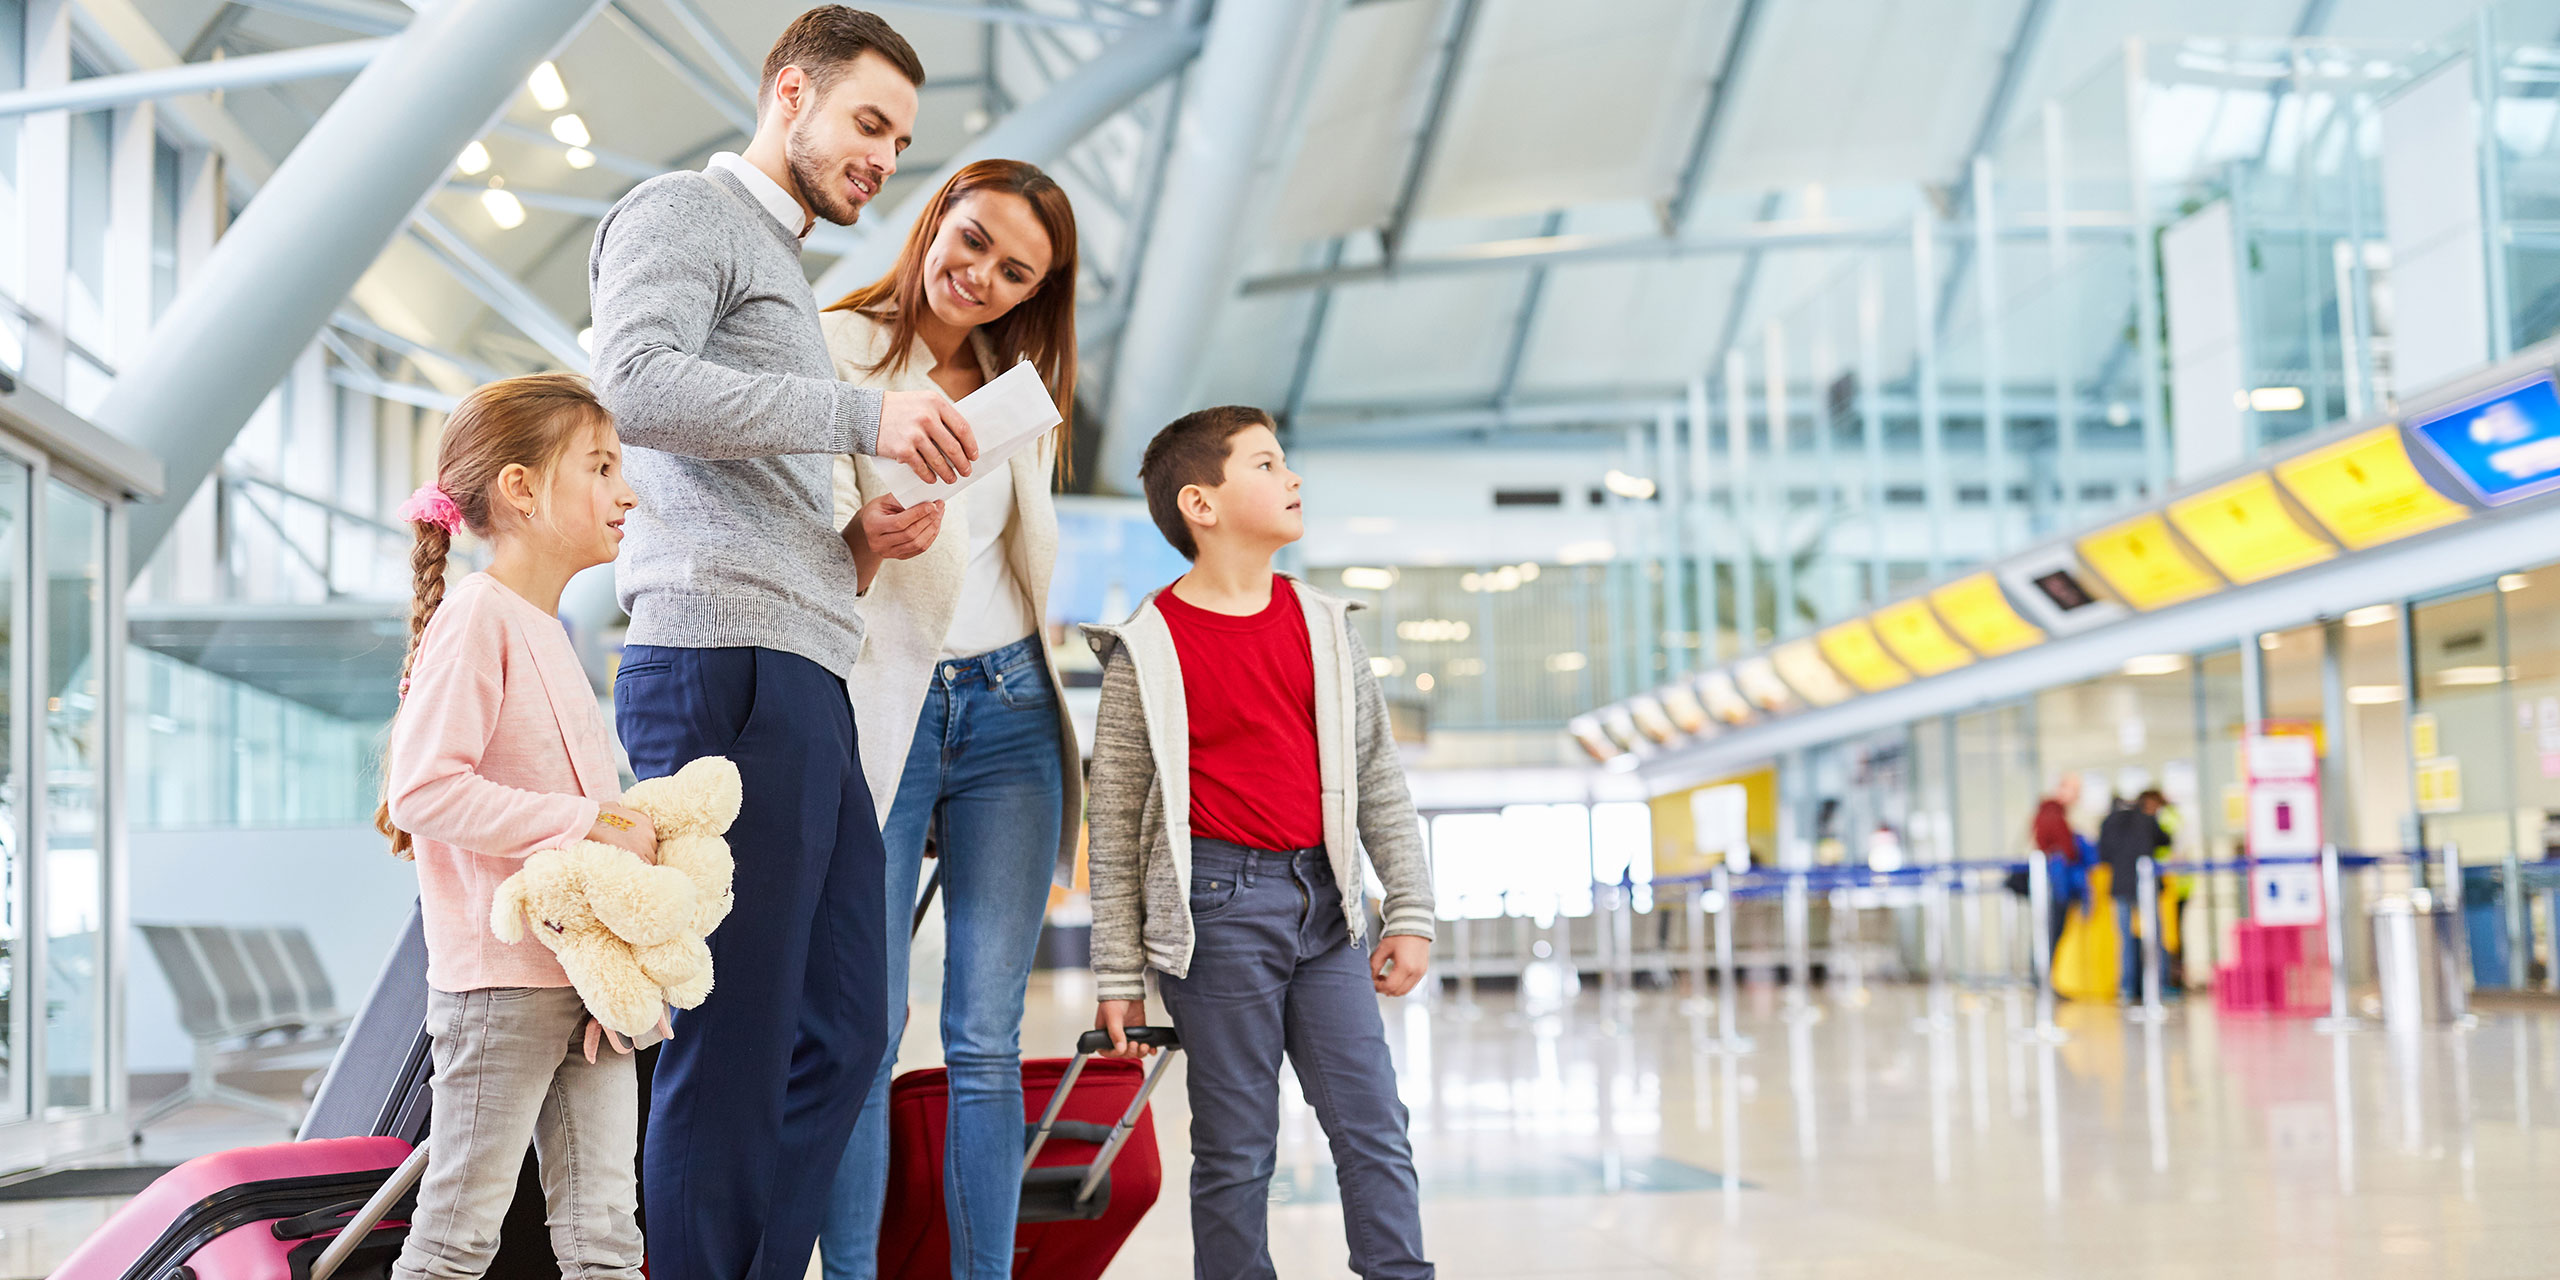 Family Standing in Airport; Courtesy of Robert Kneschke/Shutterstock.com